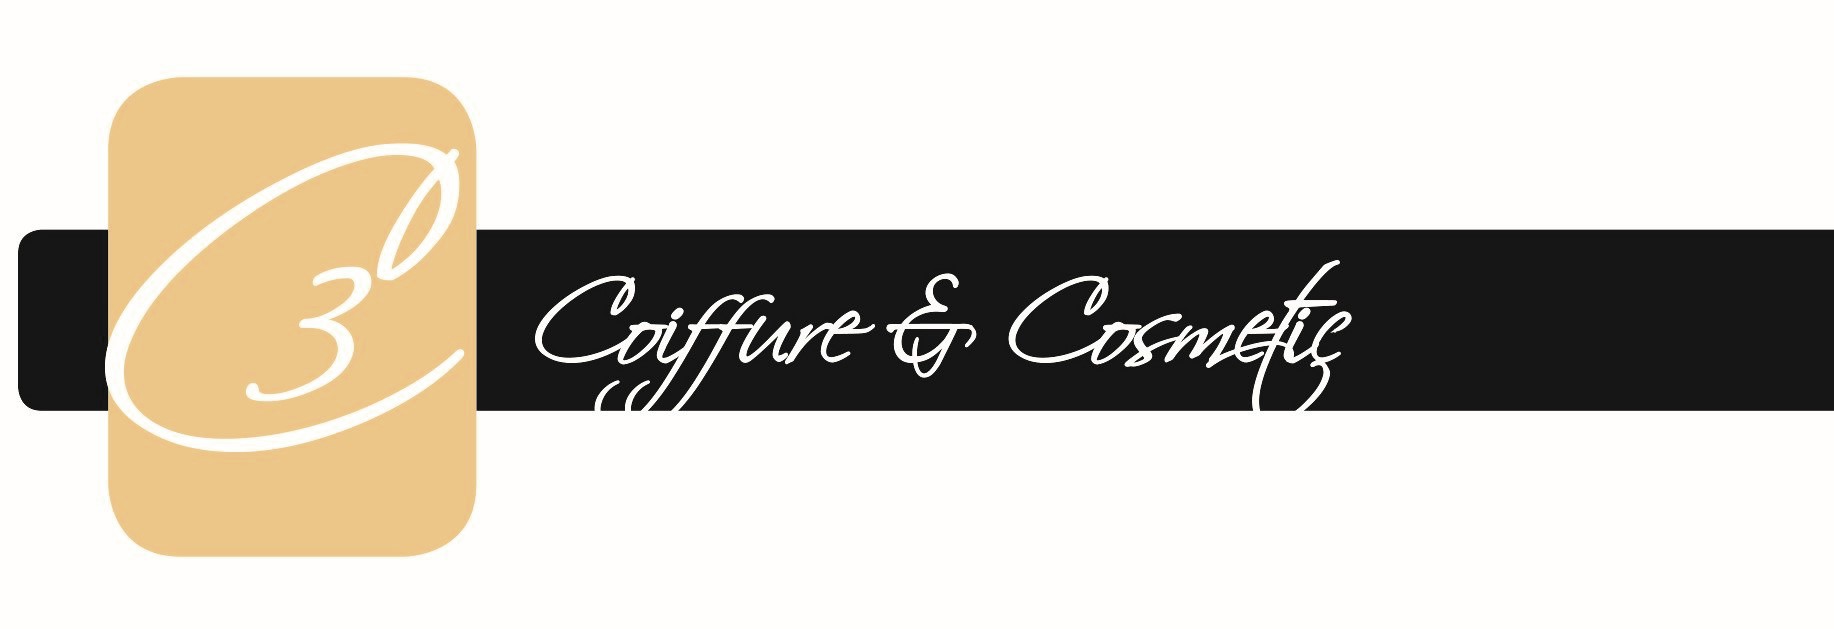 Coiffure & Cosmetics C3